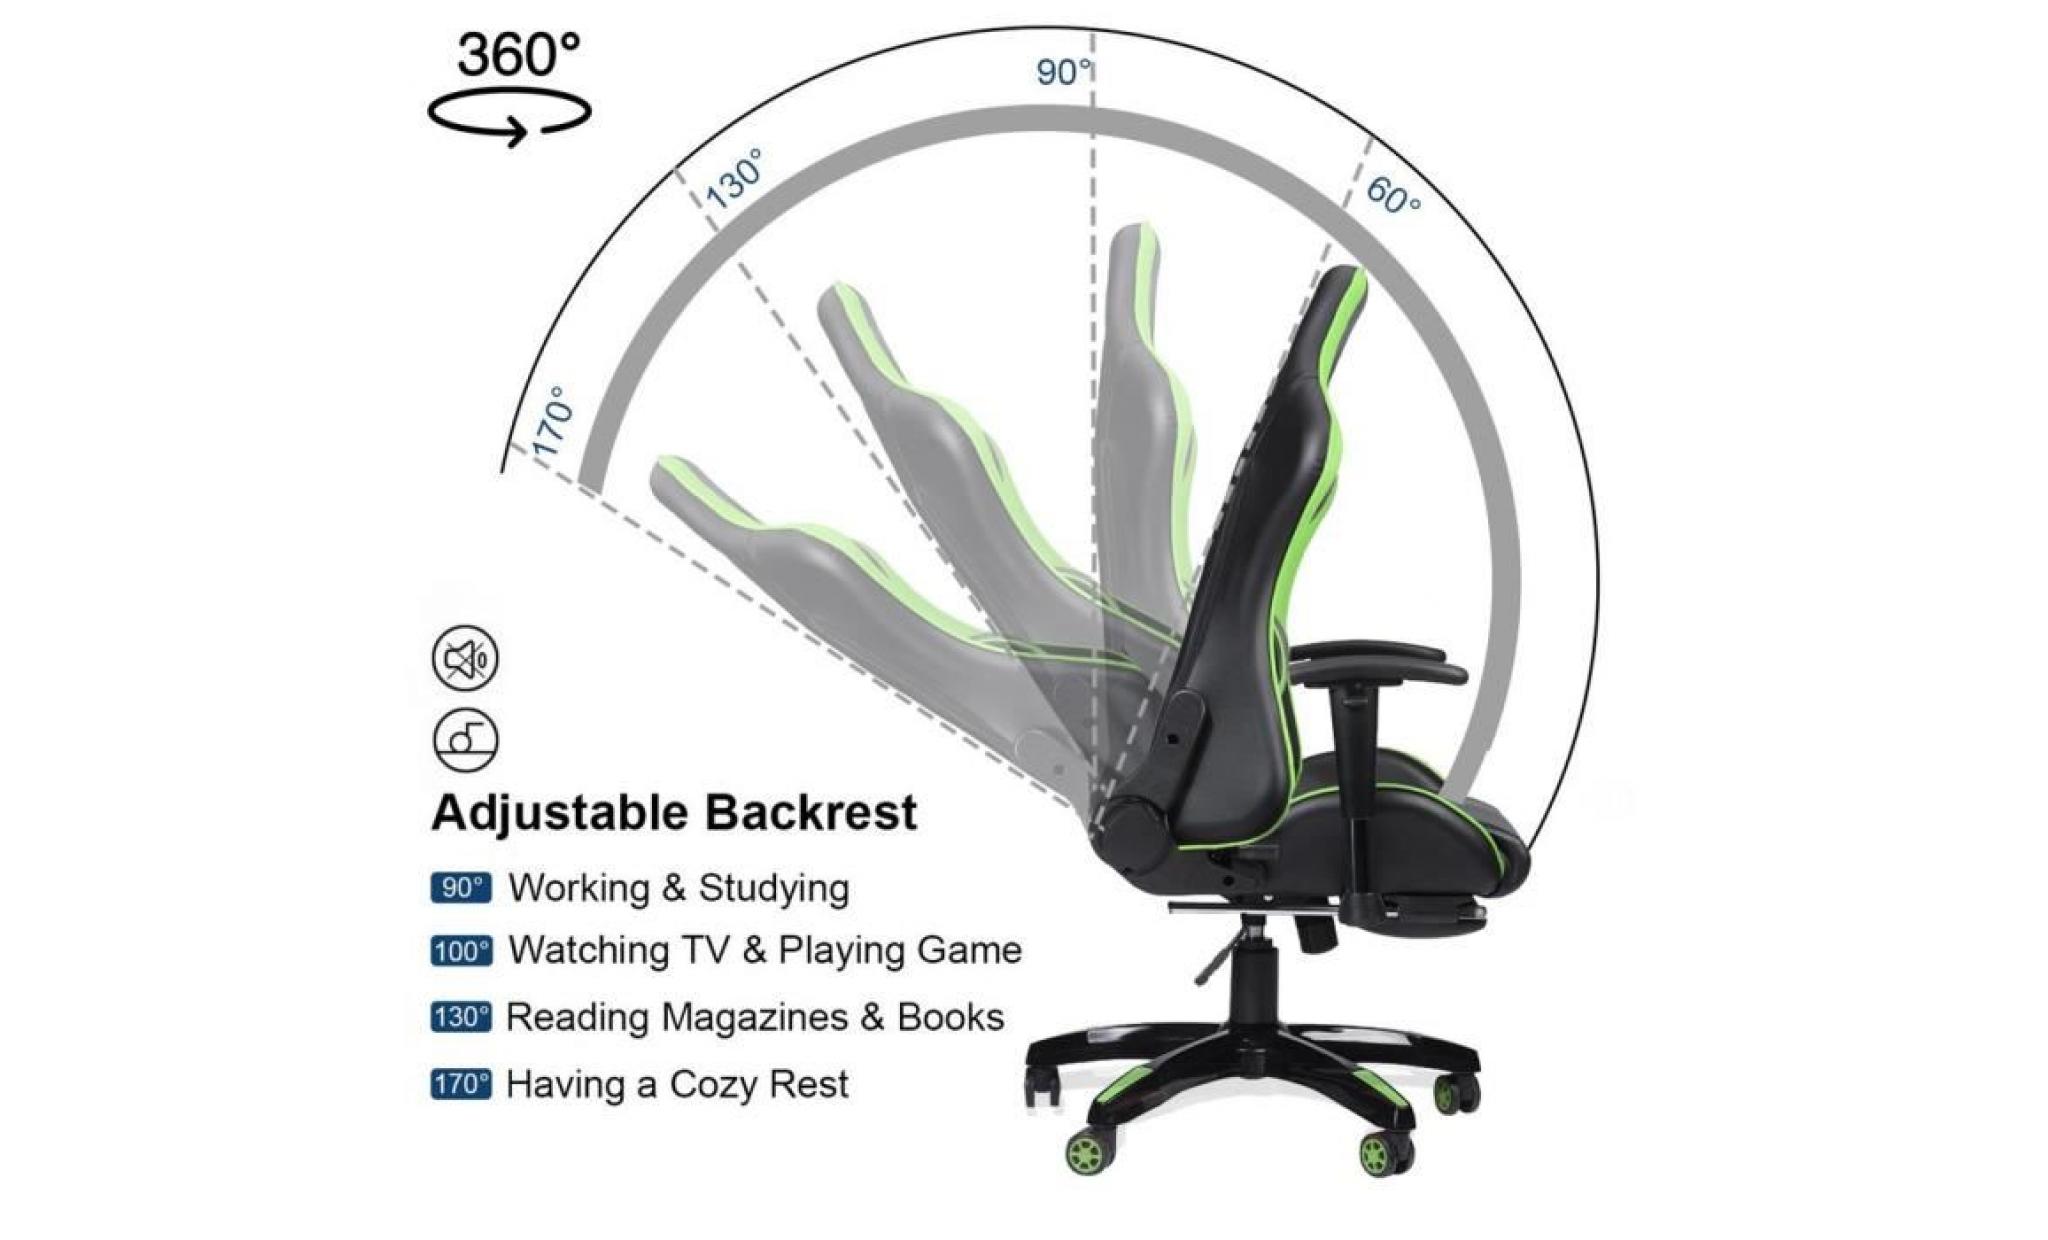 chaise de bureau gaming fauteuil gamer chair style racing racer siège vert pas cher